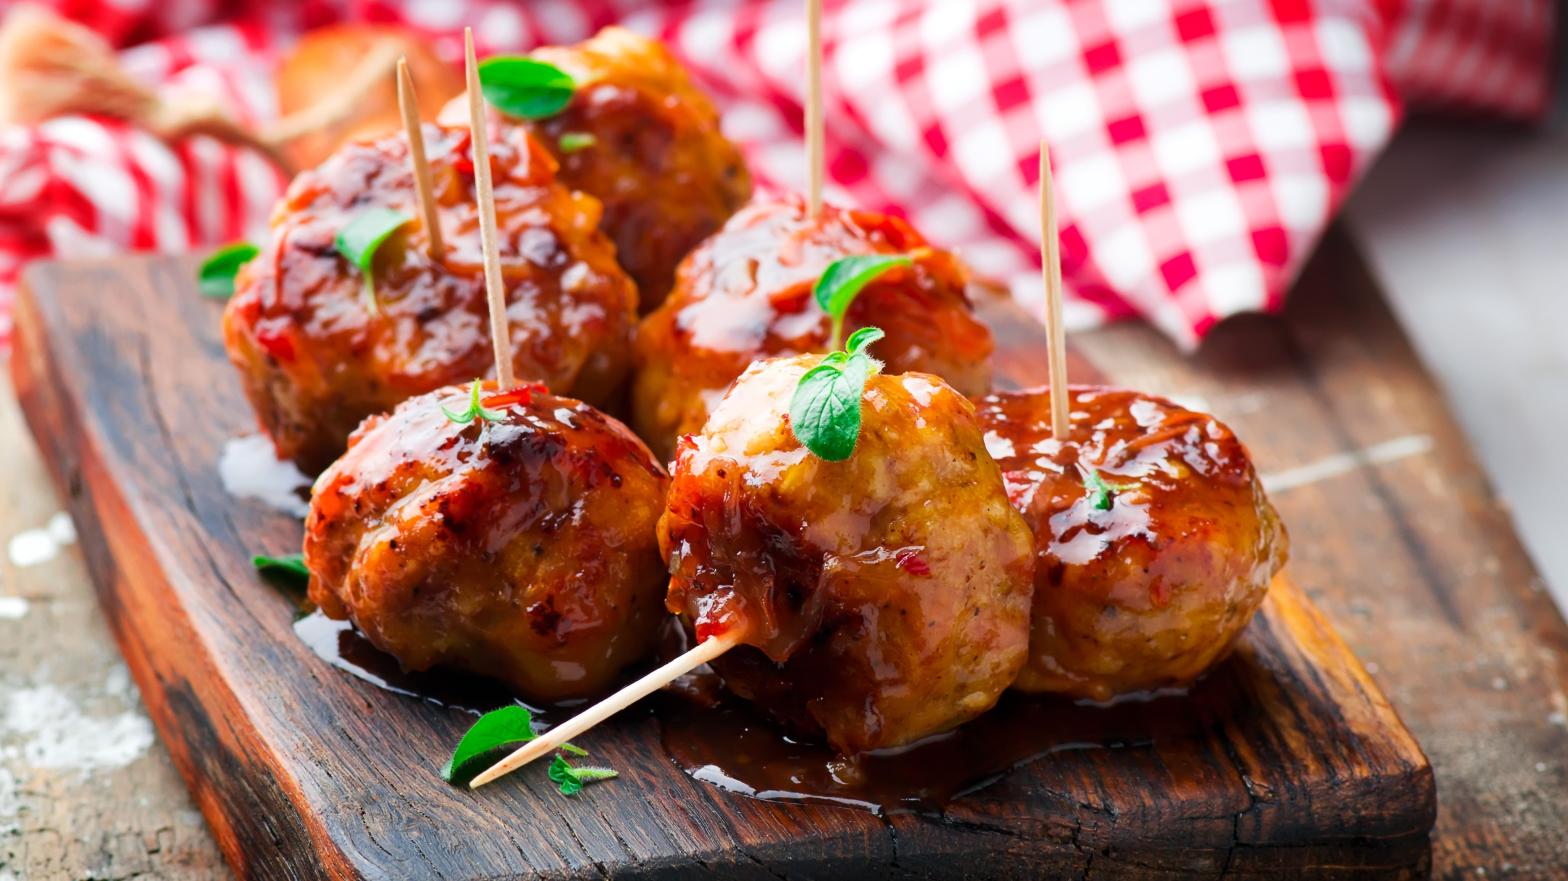 5 Ways to Make Even Better Meatballs